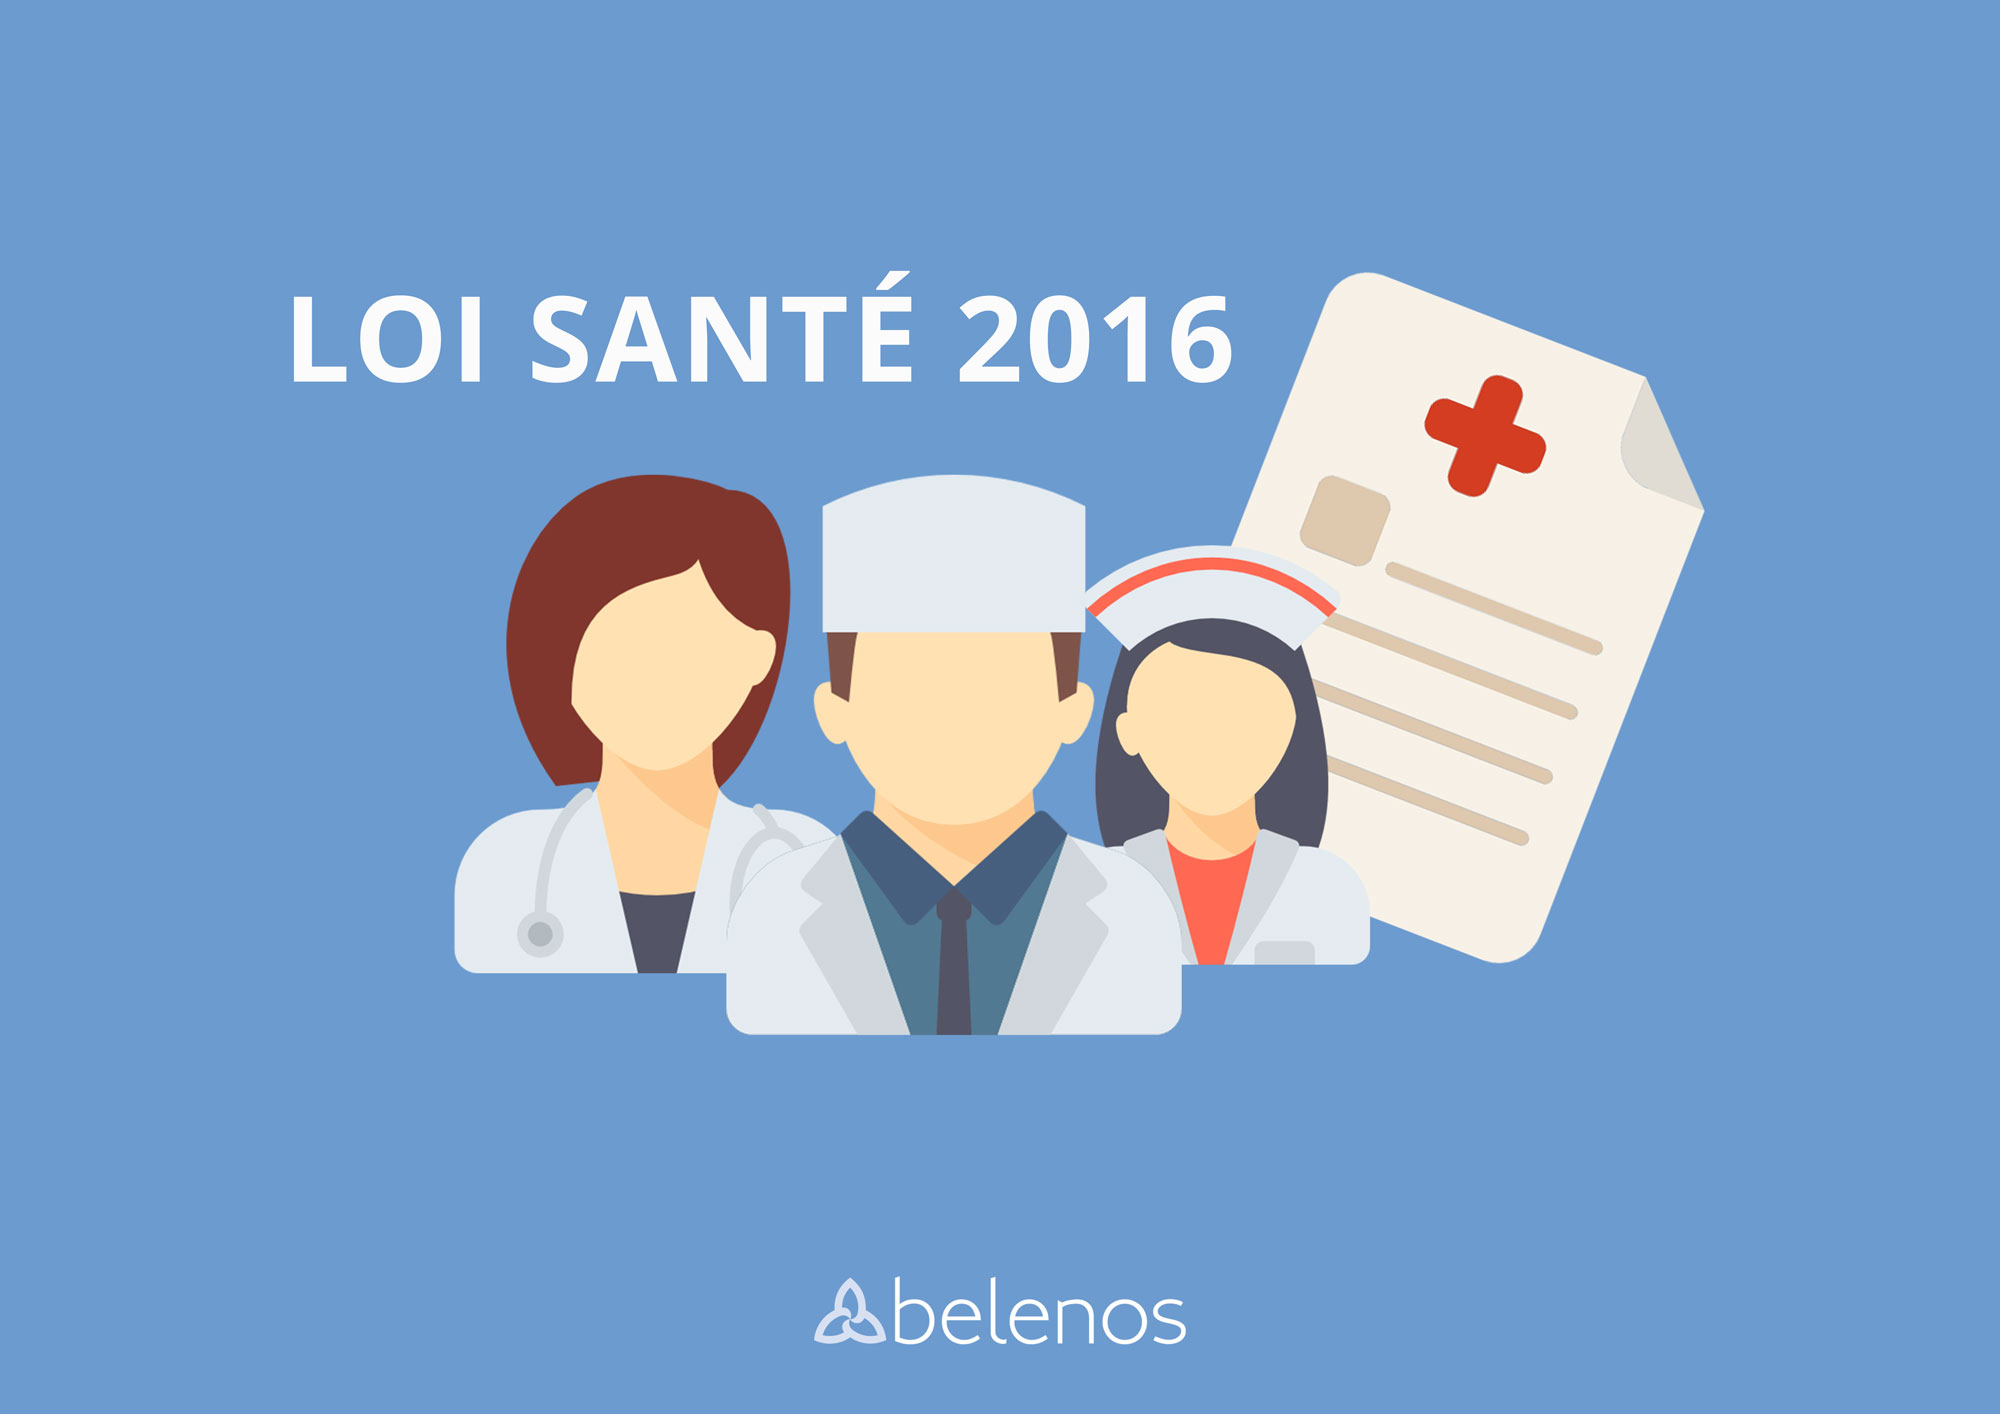 Loi santé 2016 - Belenos